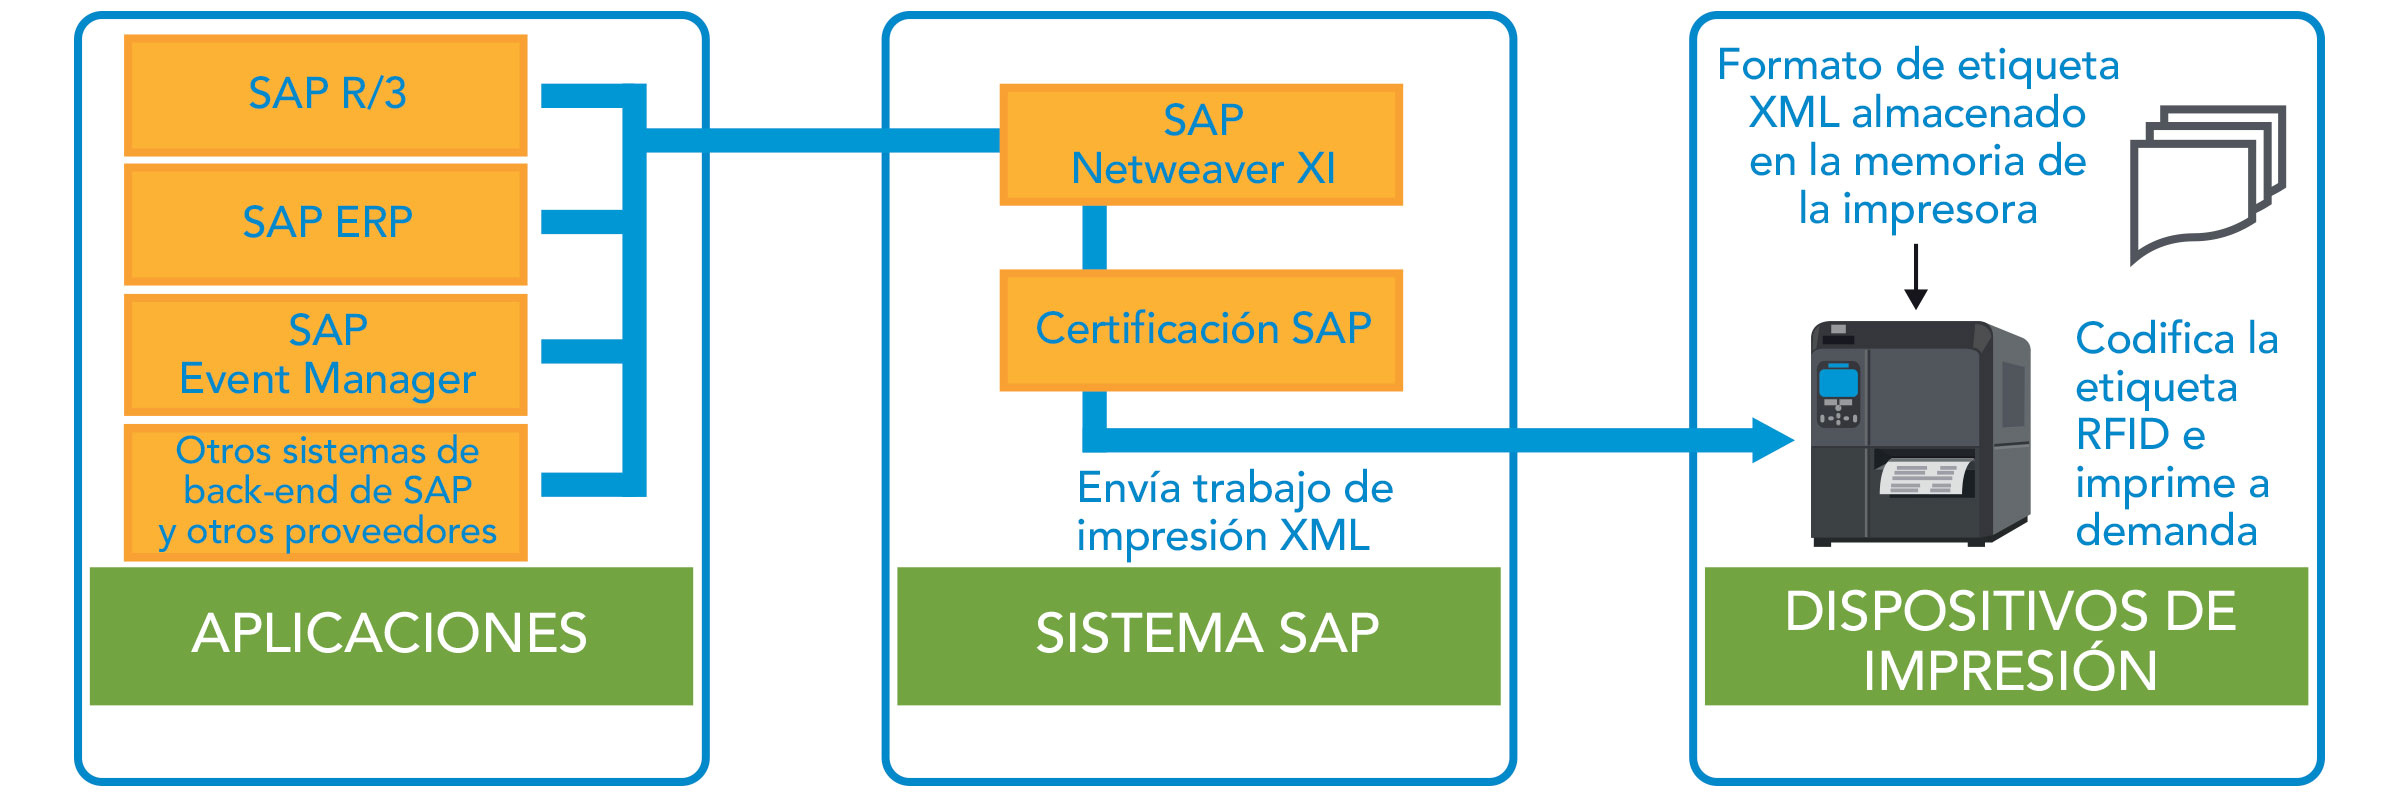 Aplicaciones > Sistema SAP > Dispositivos de impresión